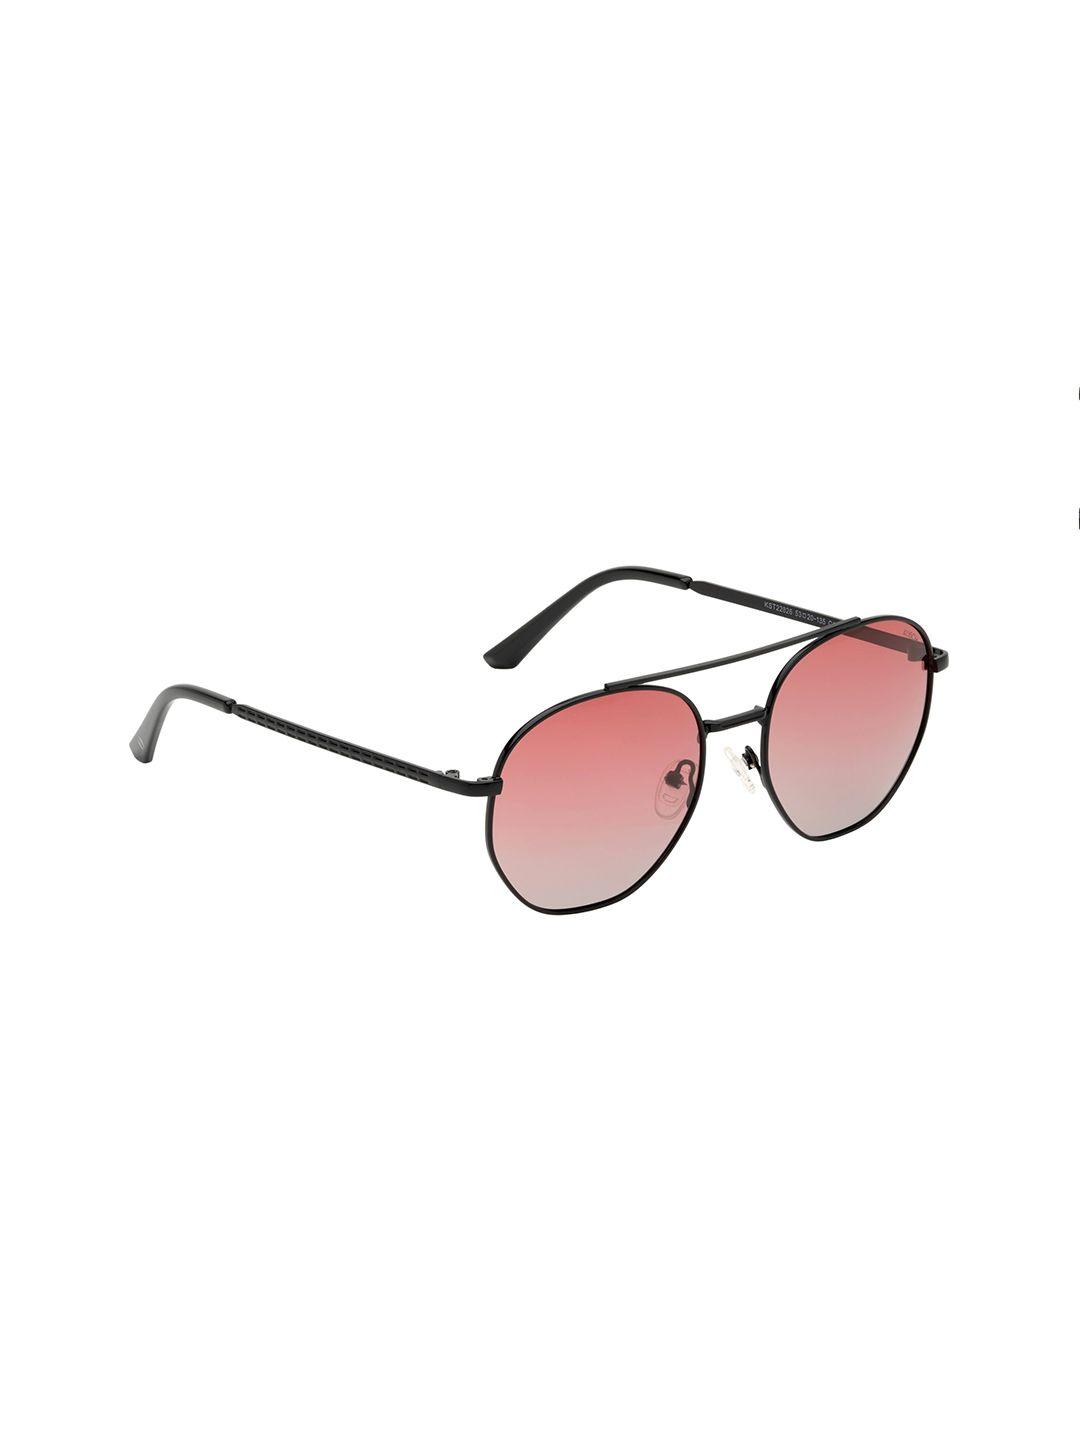 kosch elemente men red lens & black aviator sunglasses with polarised lens kst 22829 c2